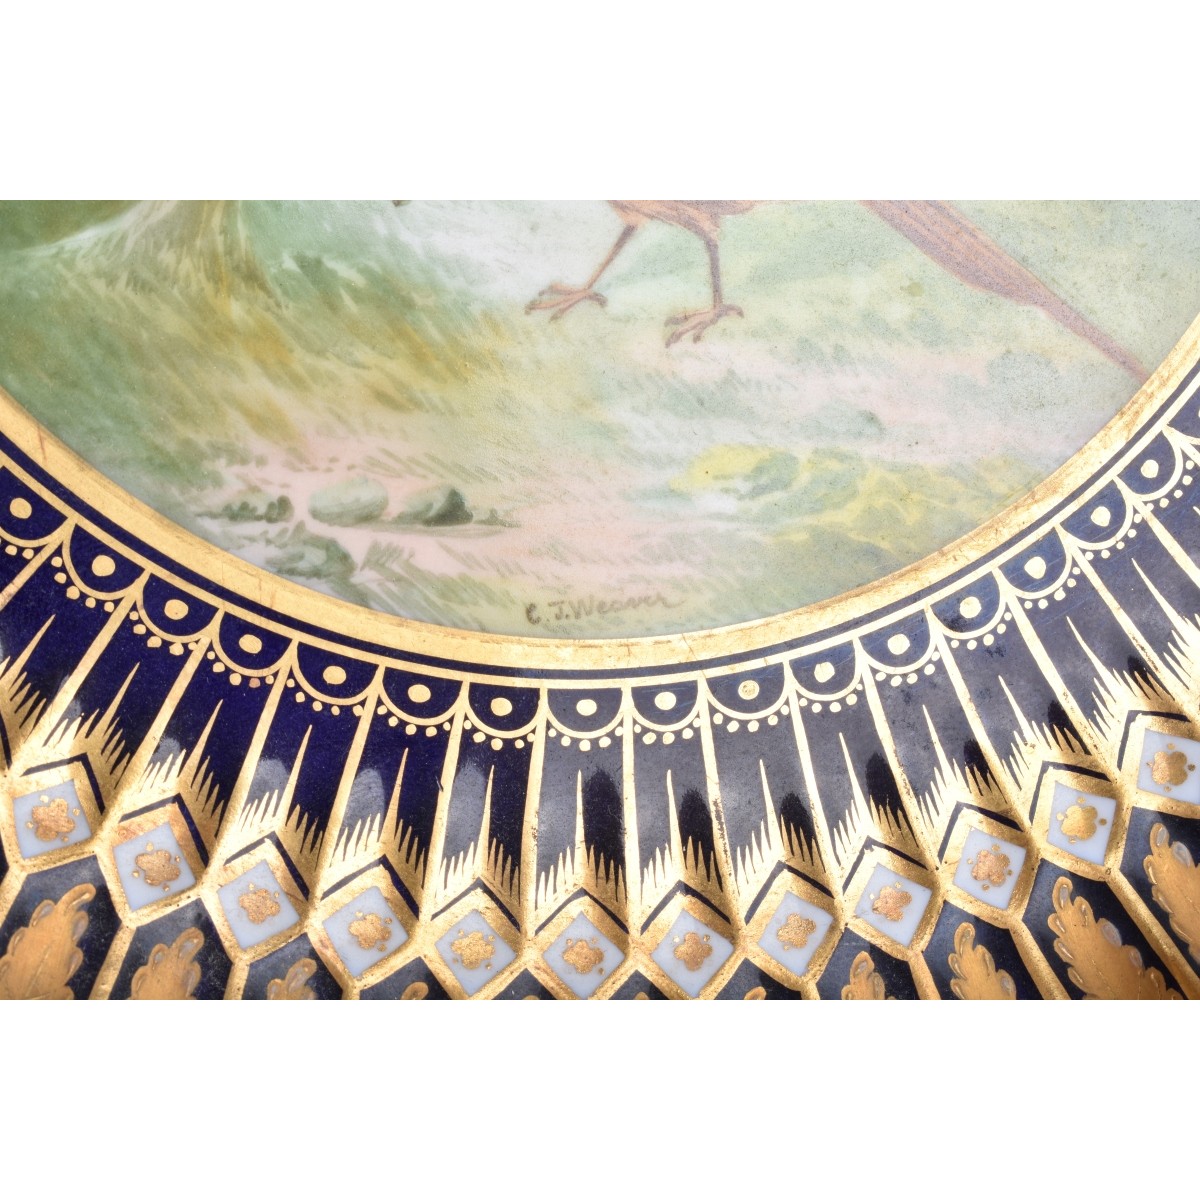 Pr. of Tiffany & Co. Cabinet Plates by C.J. Weaver